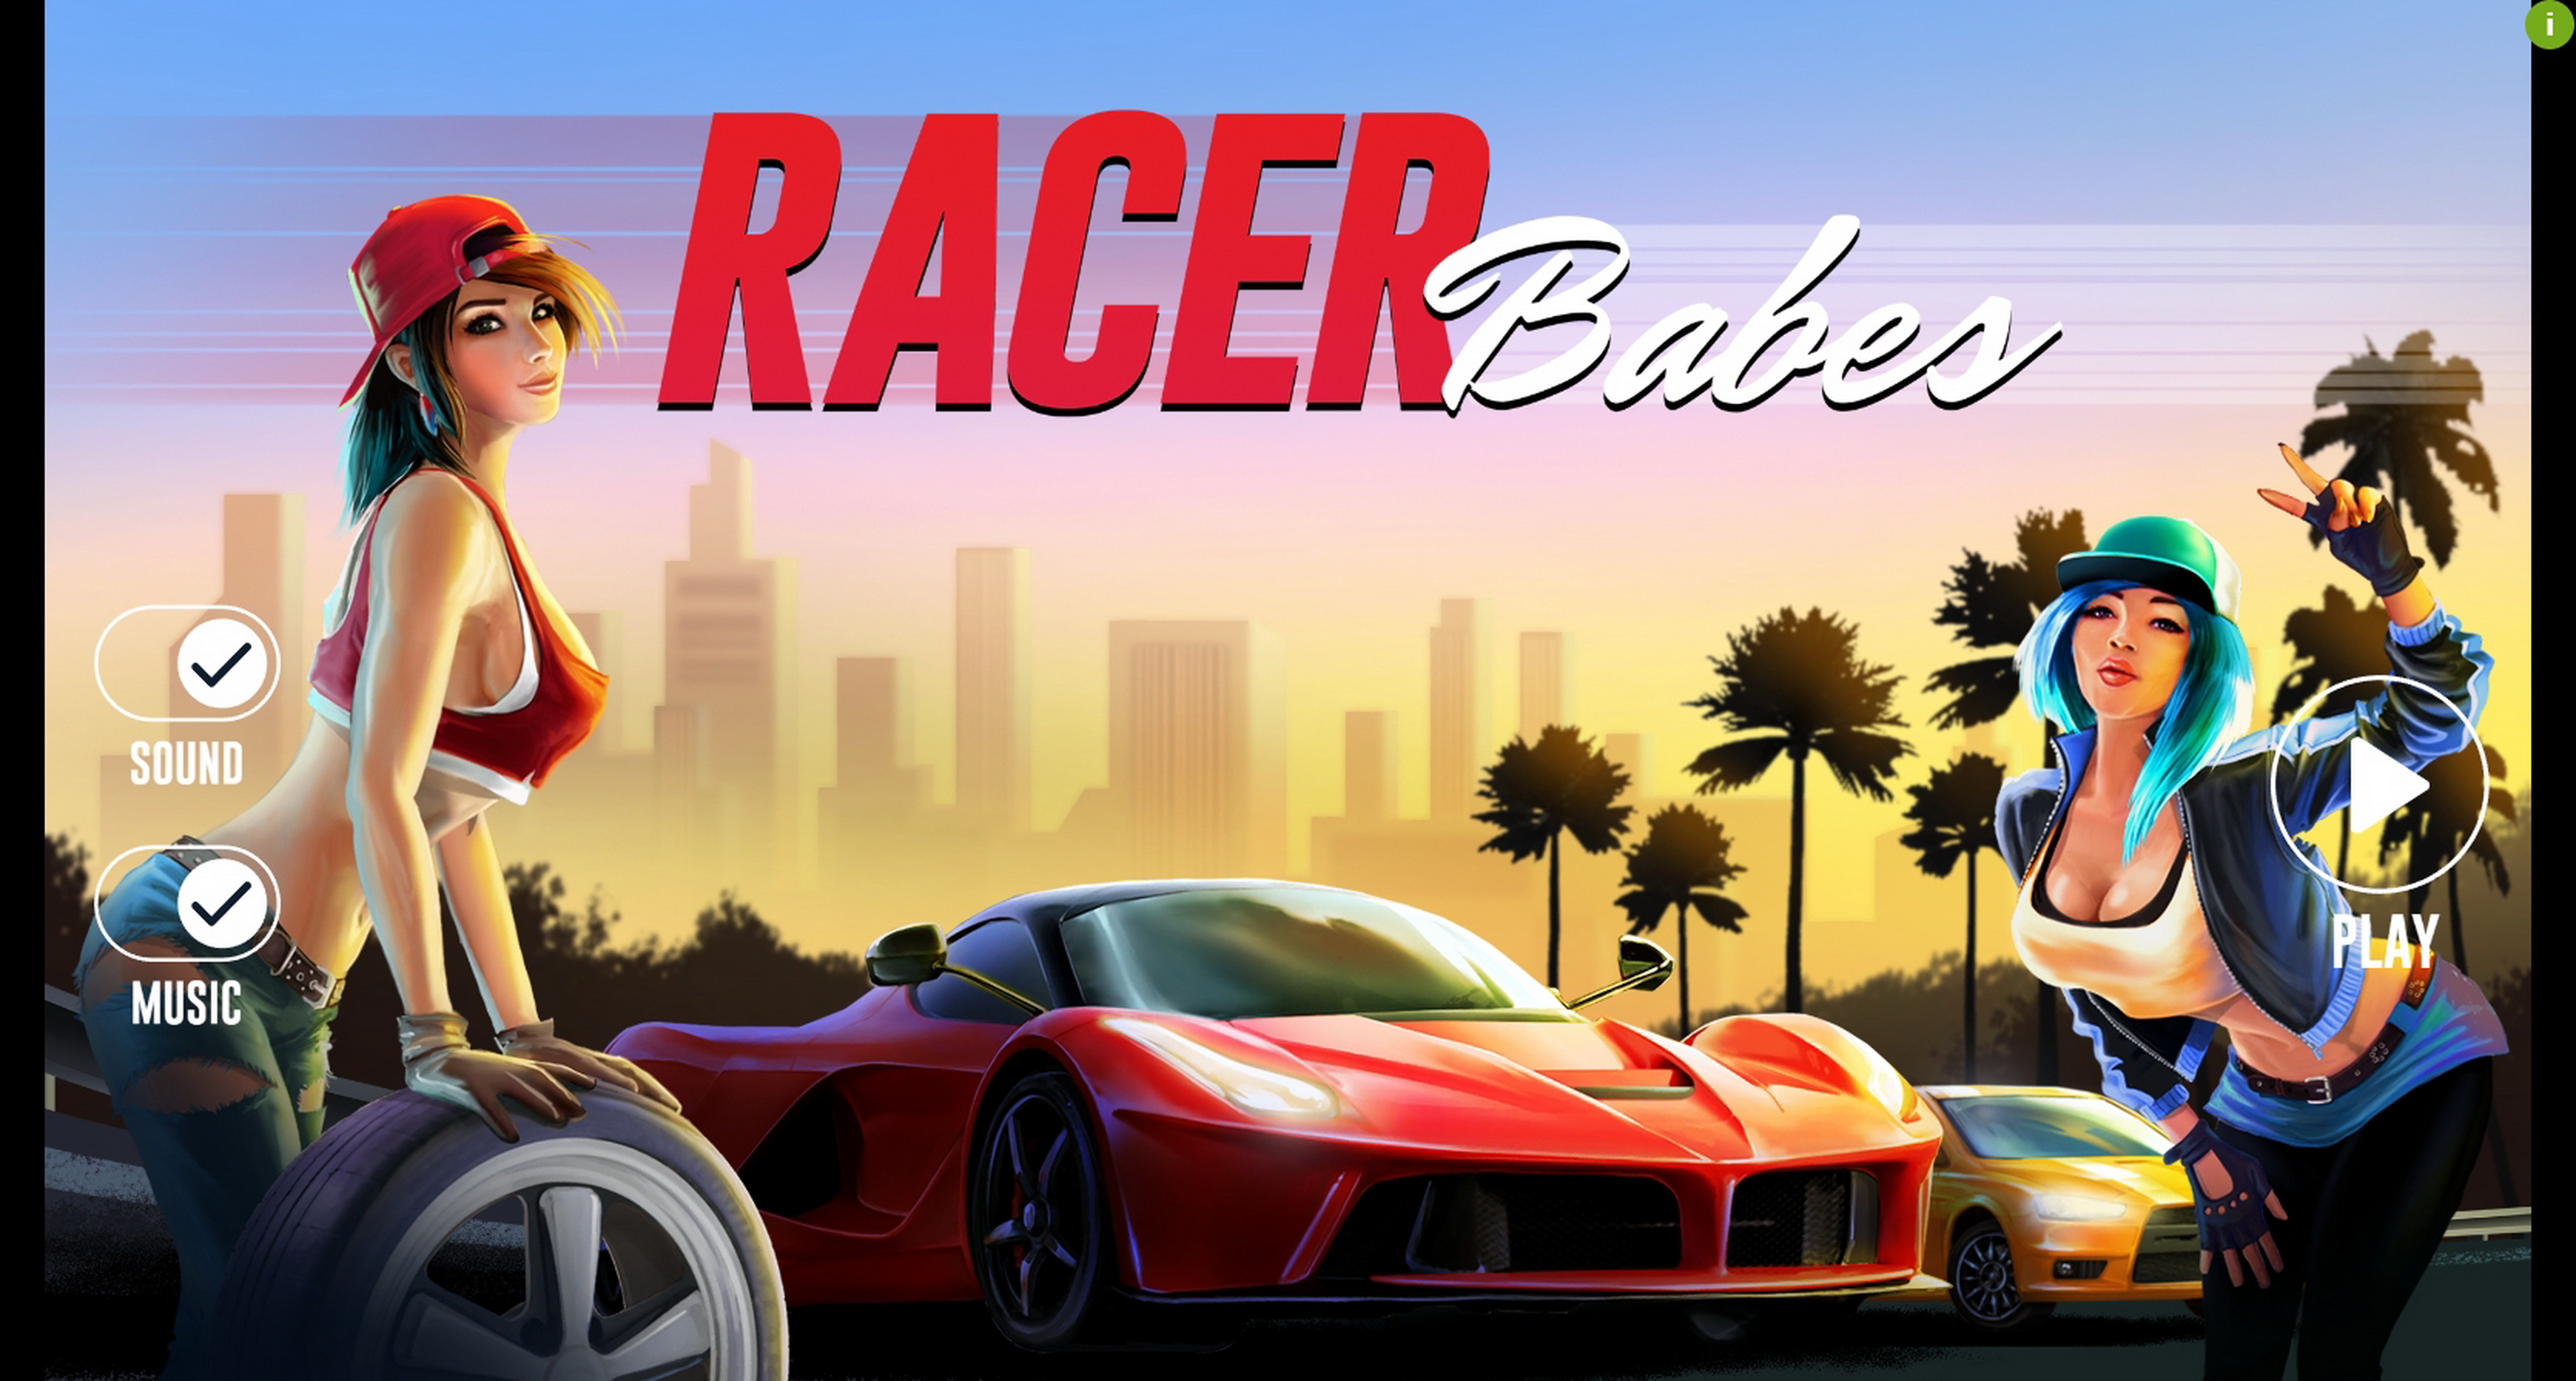 Racer Babes demo